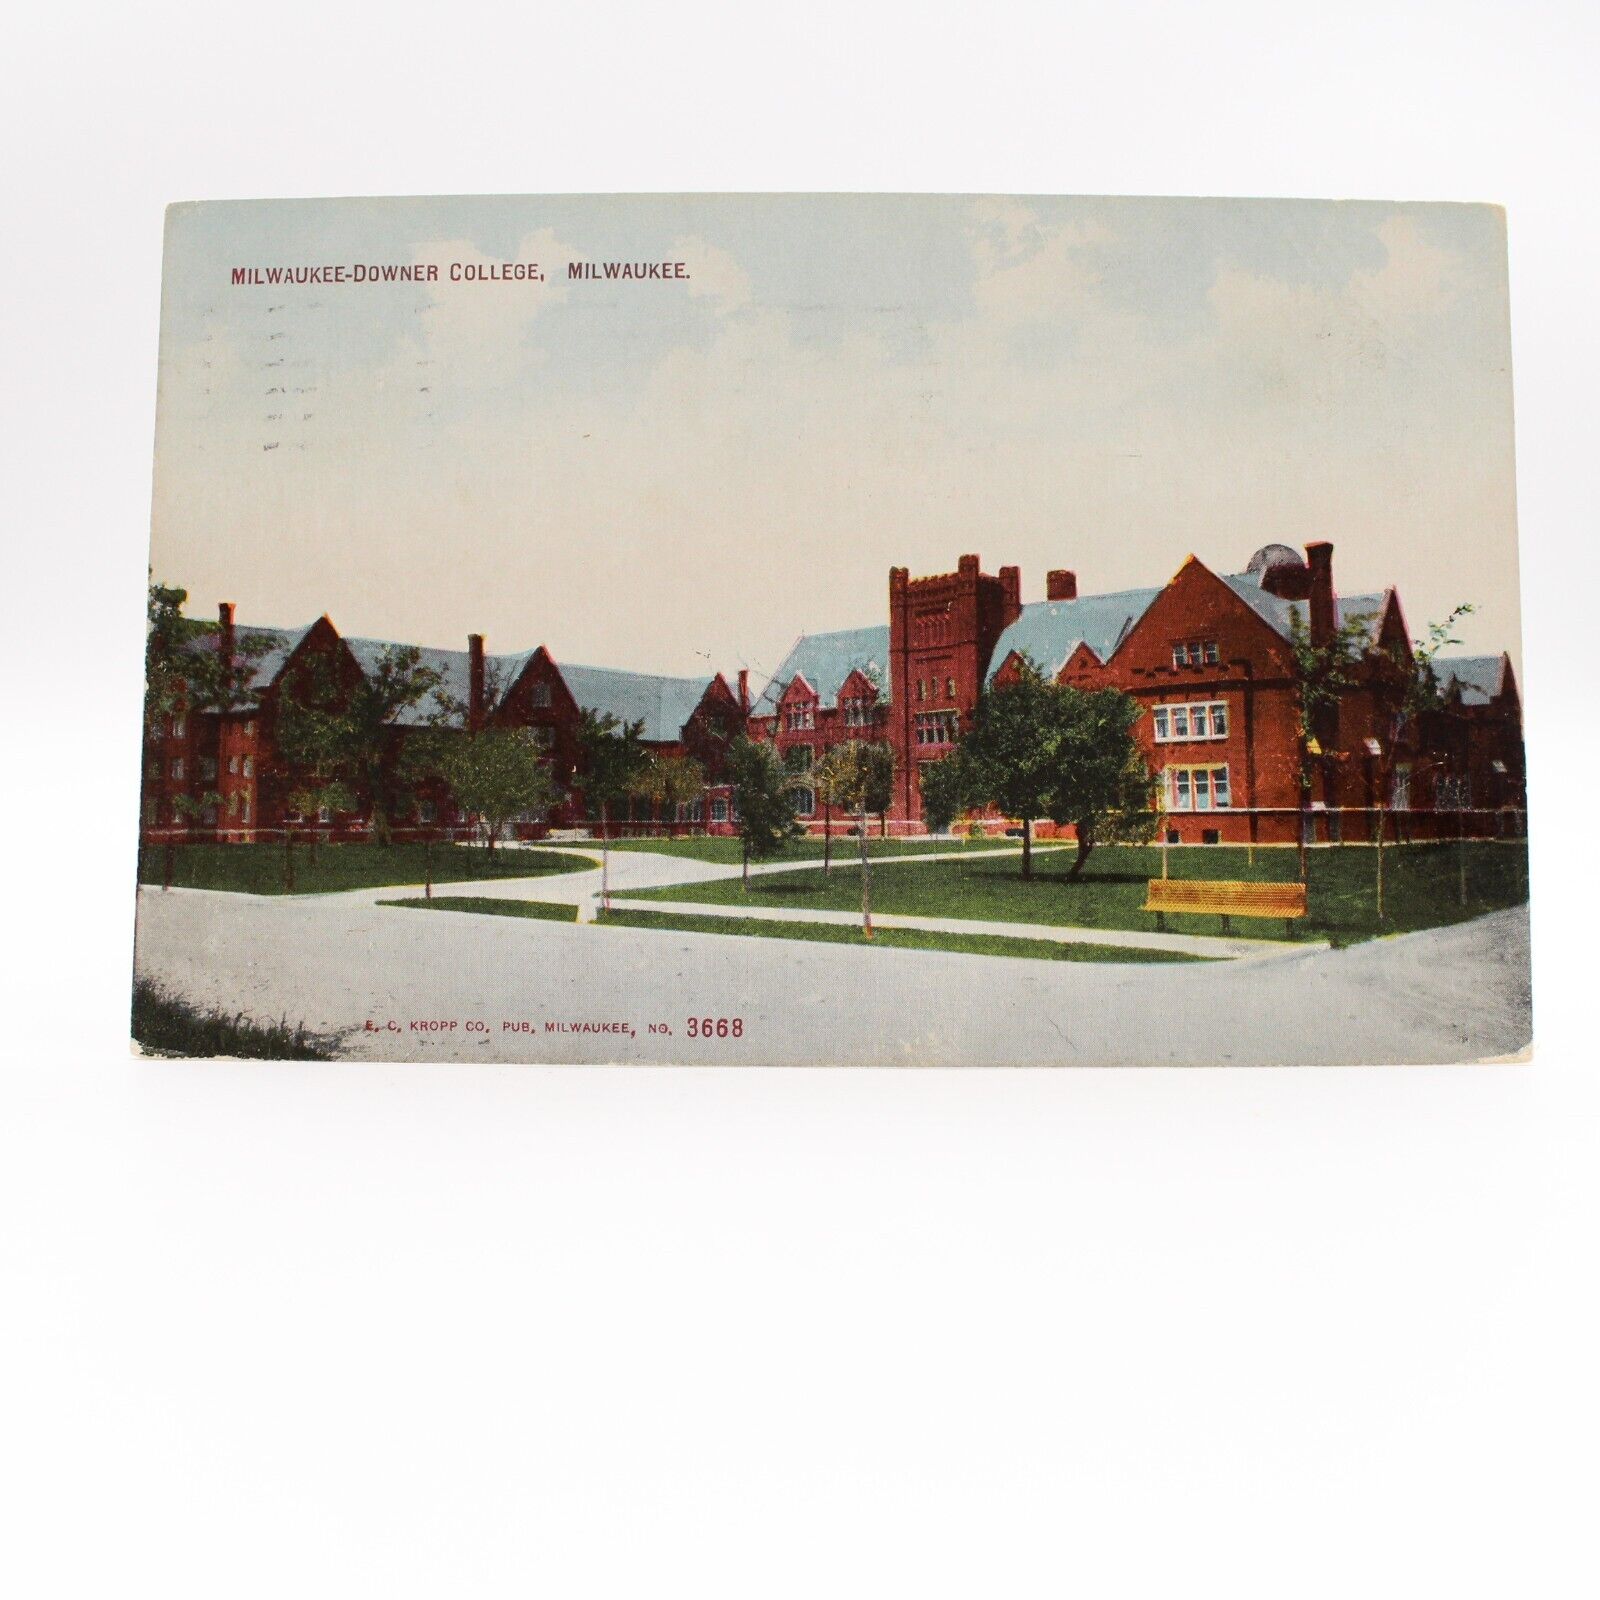 1910 Milwaukee Downer College, MILWAUKEE, Wisconsin Postcard - Kropp Posted